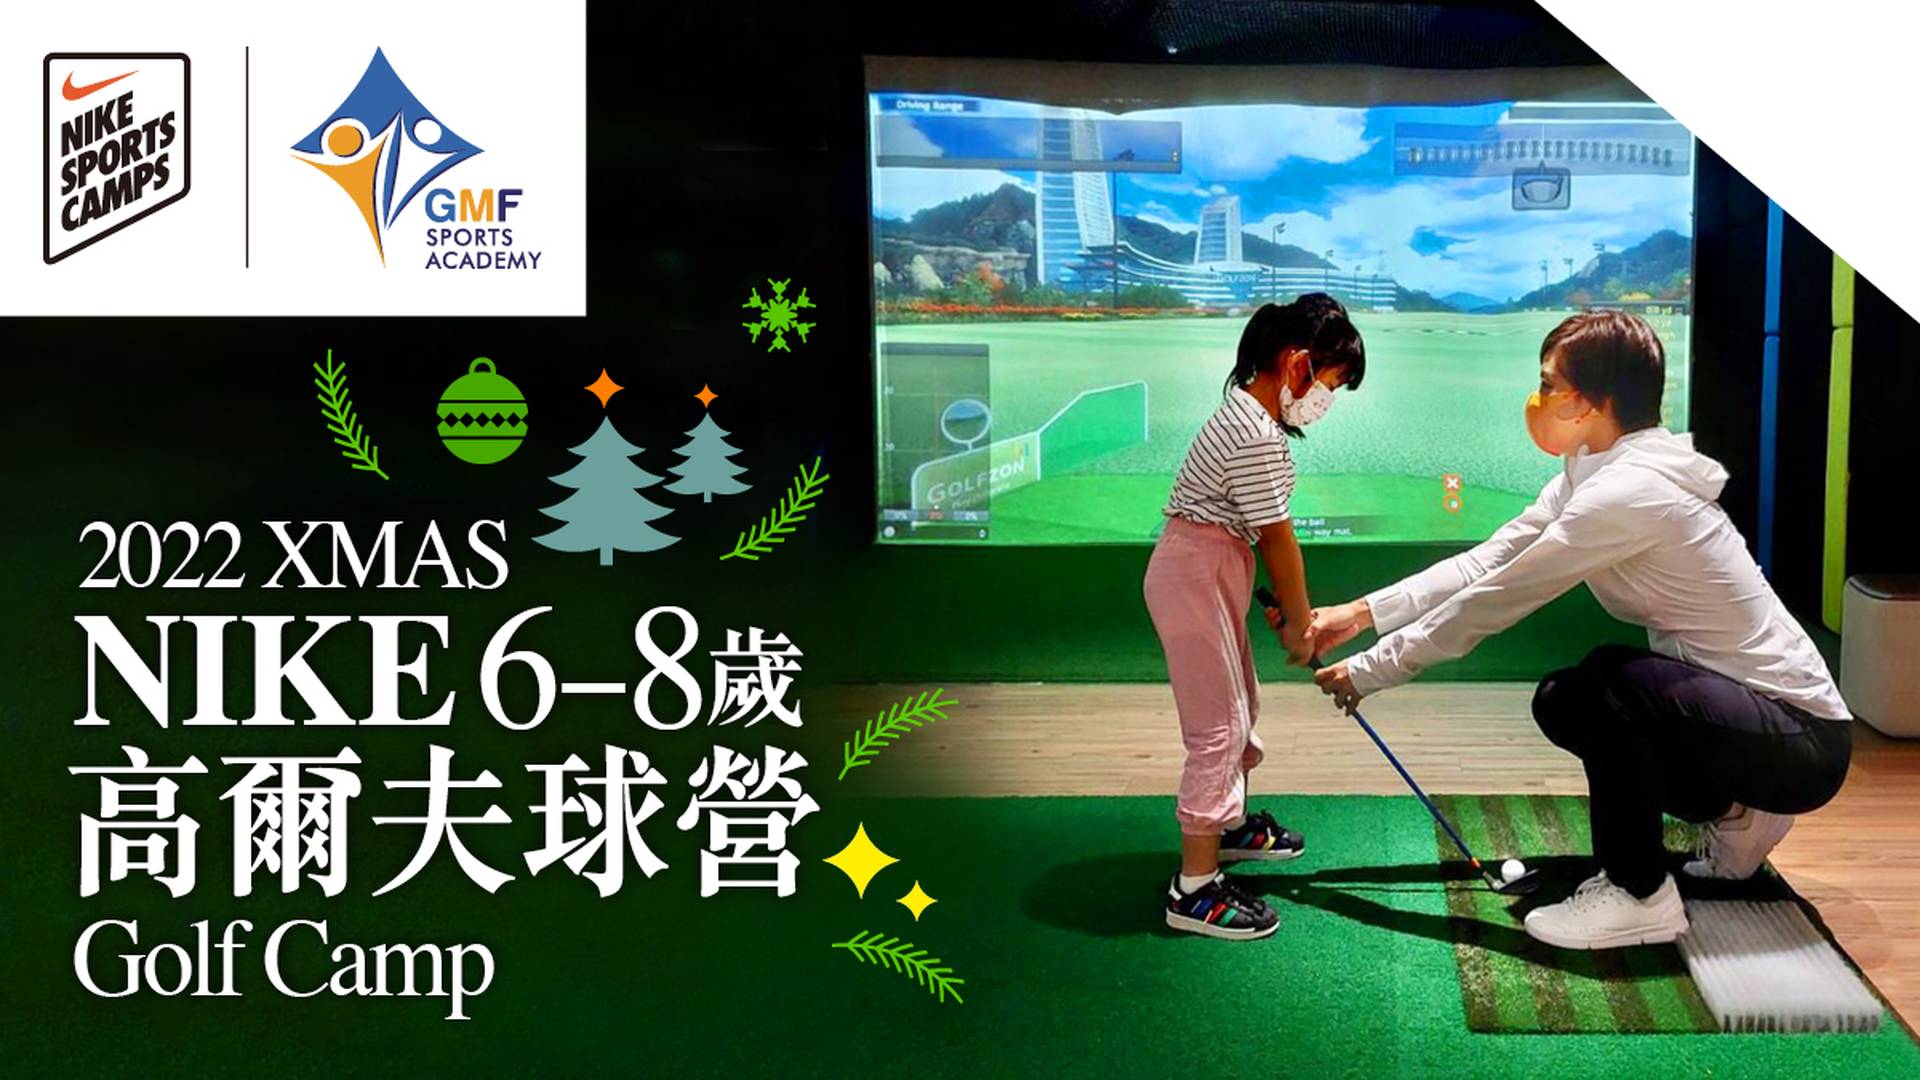 XMAS NIKE Golf Camp聖誕Nike高爾夫球營 2022 (6-8歲)